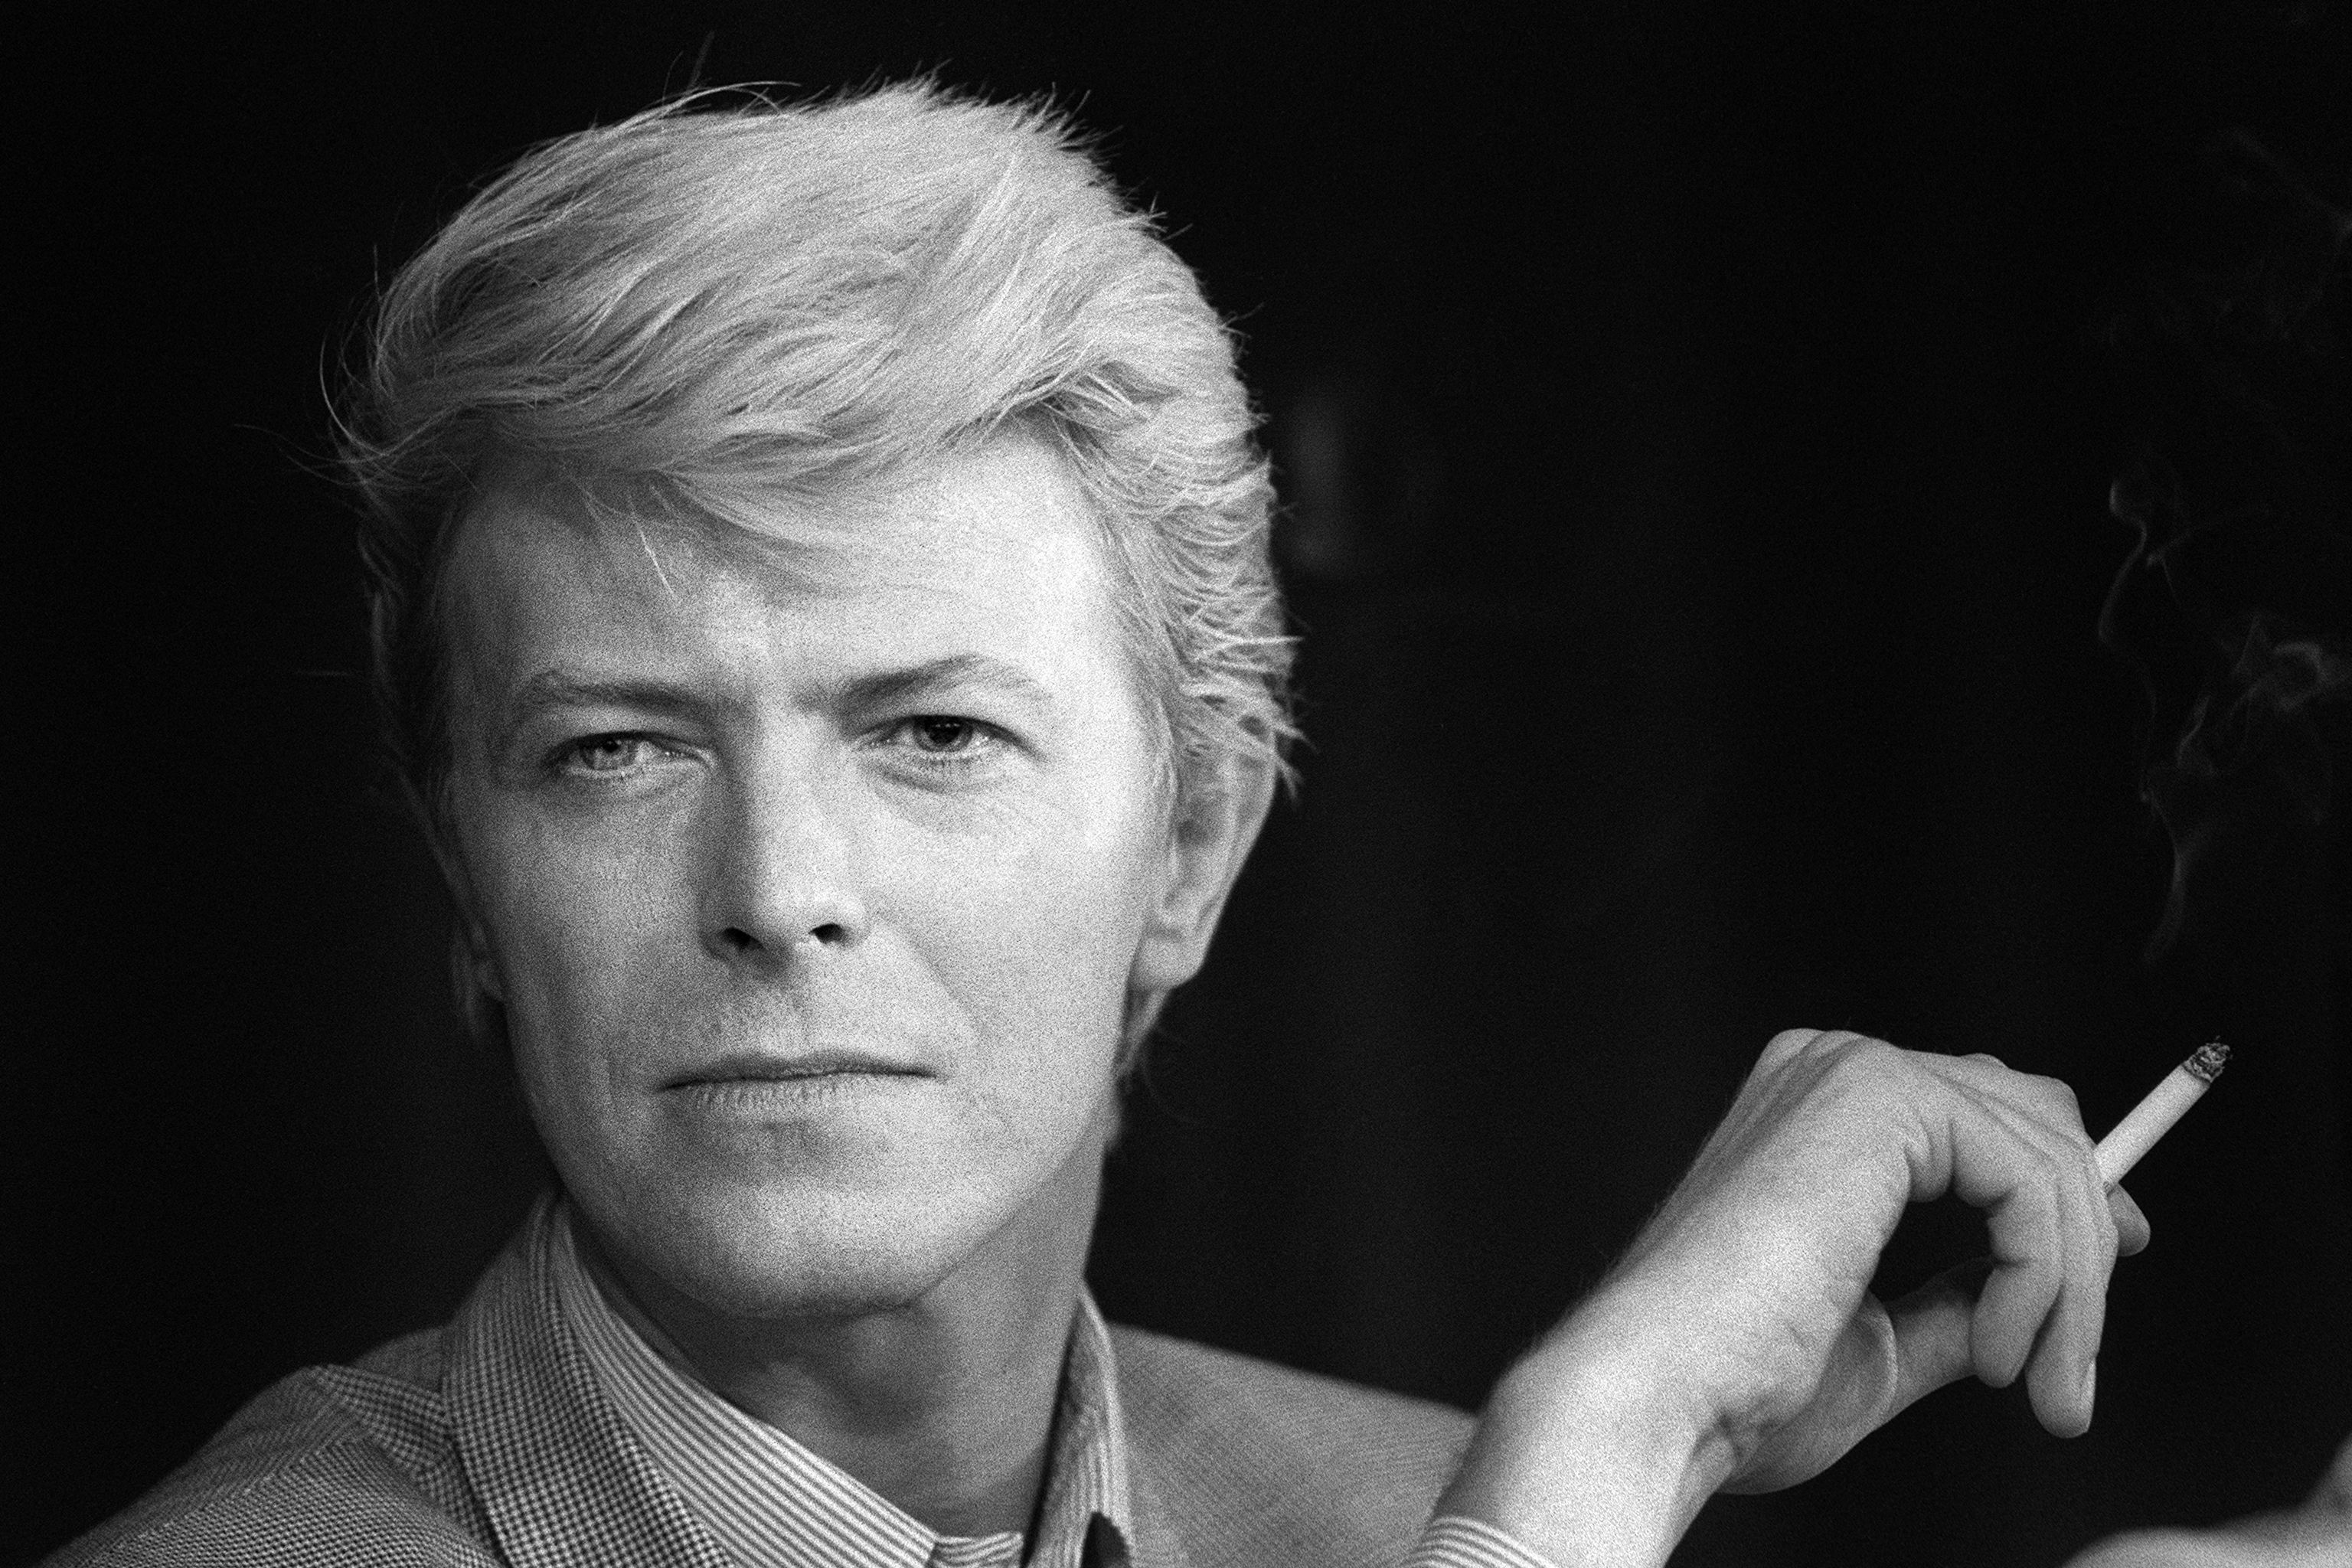 David Bowie, en el documental 'Moonage daydream'.